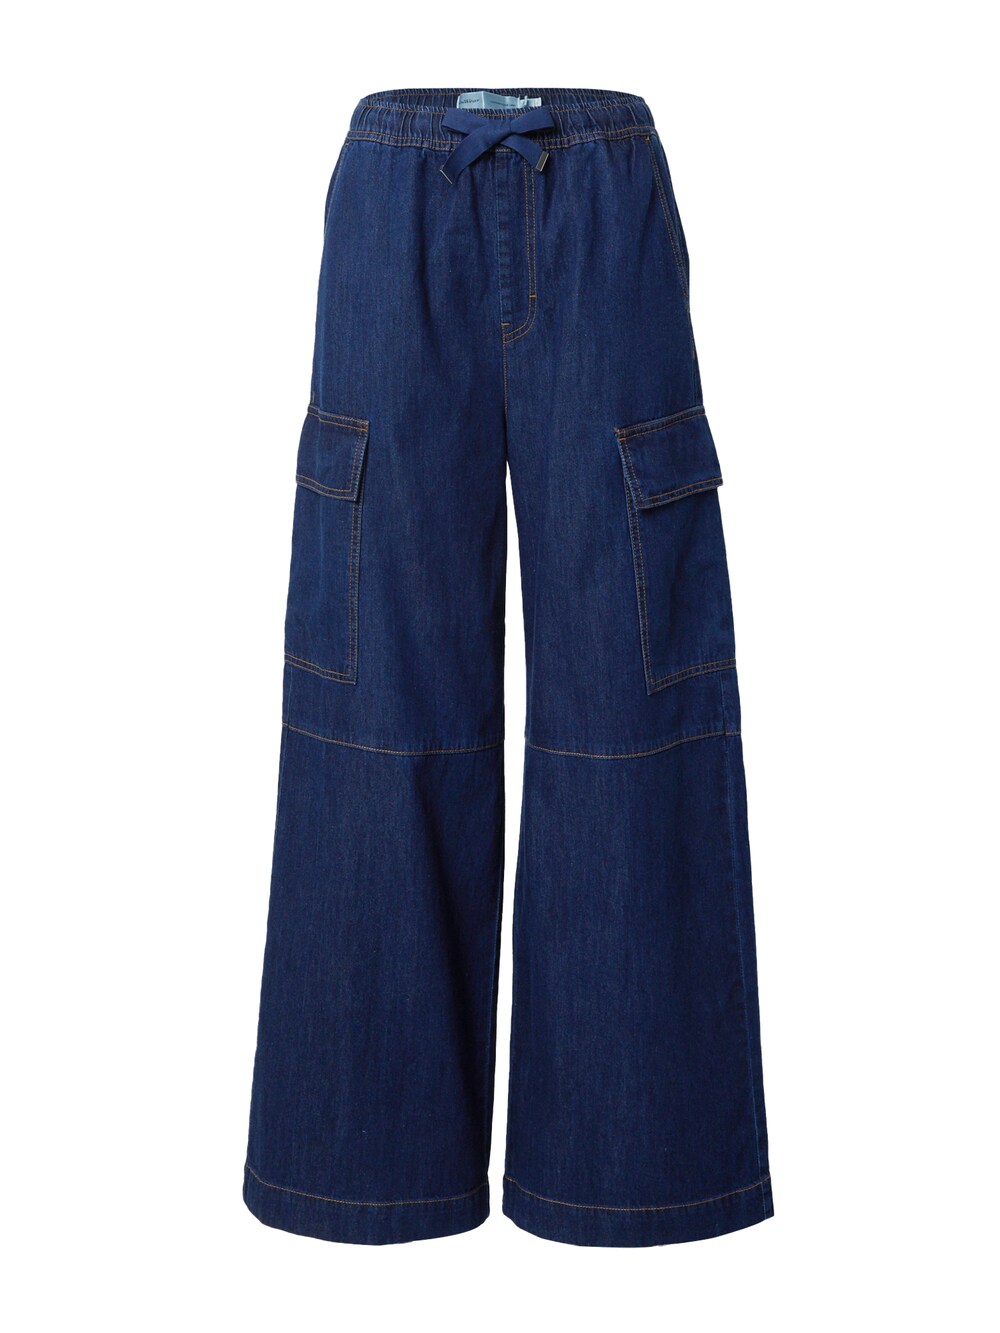 Широкие джинсы-карго Inwear IzoebelI, темно-синий